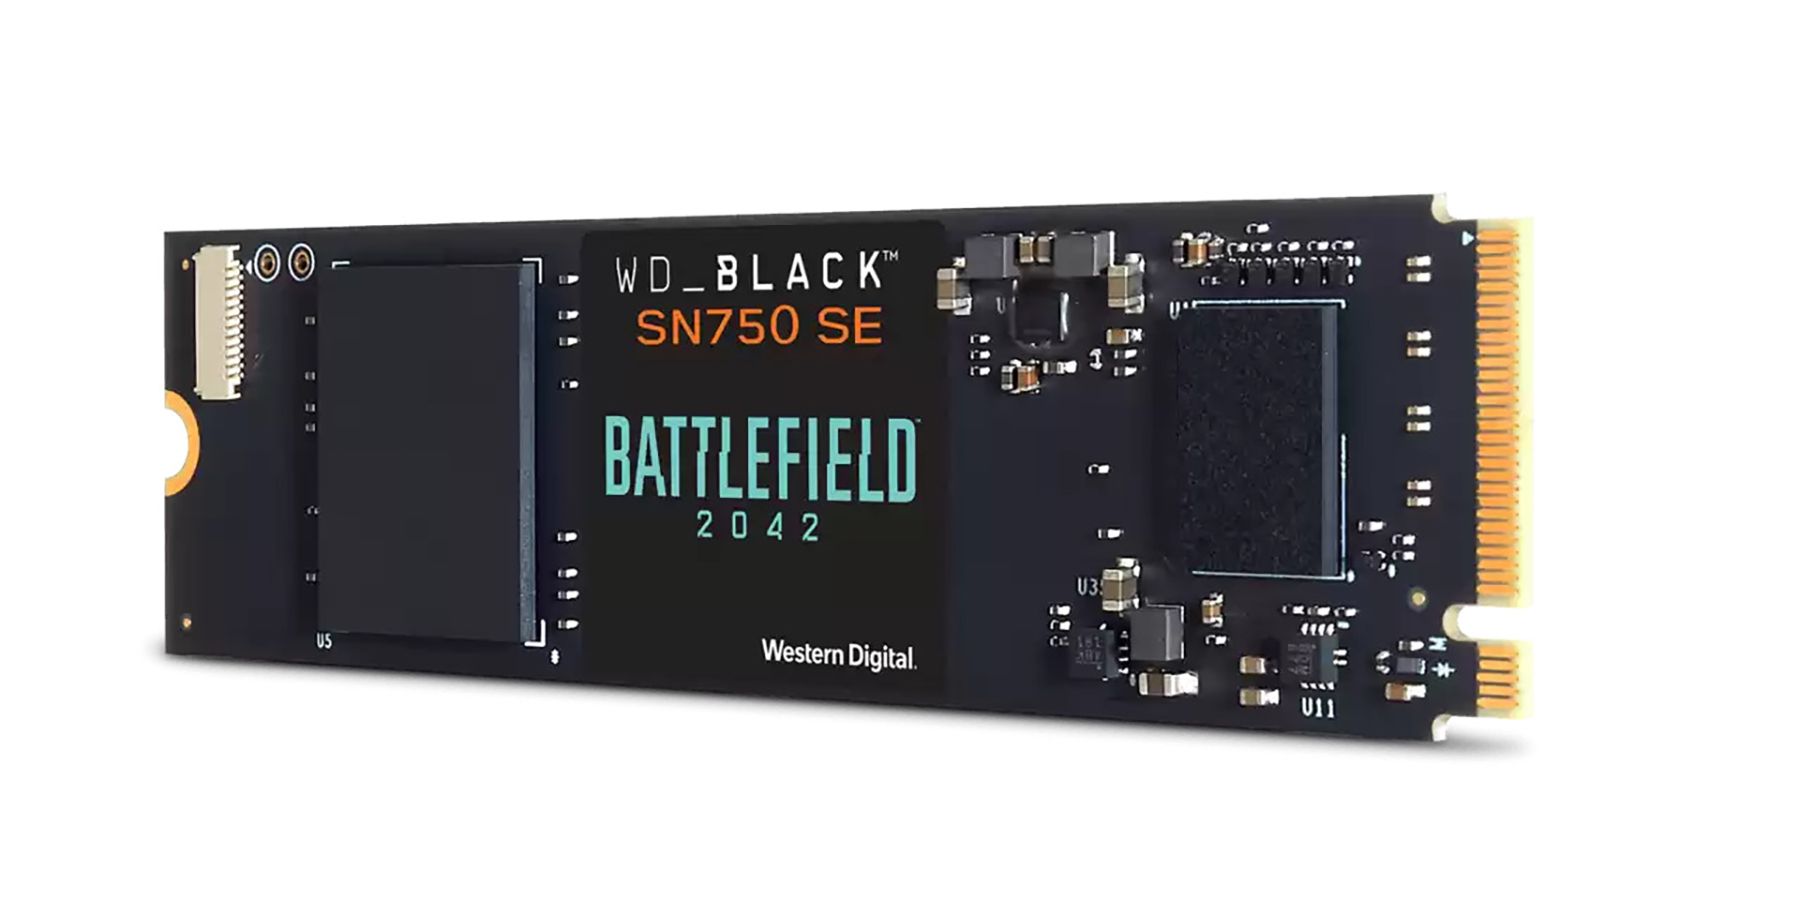 wd-black-sn750-se-nvme-ssd-battlefield-2042-close-up